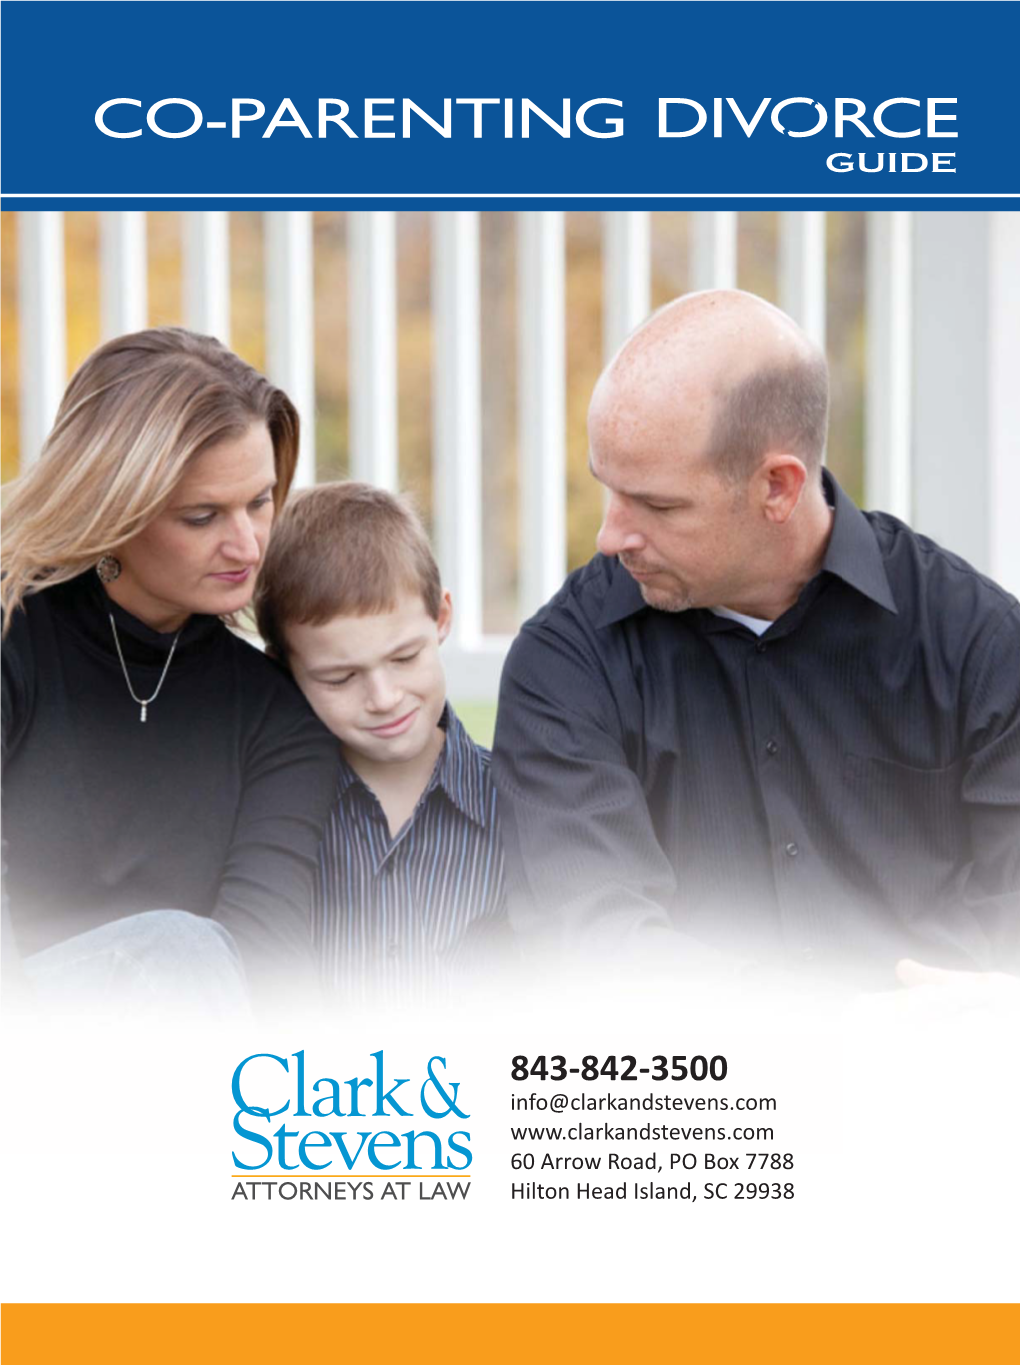 Clarks & Stevens Divorce Guide